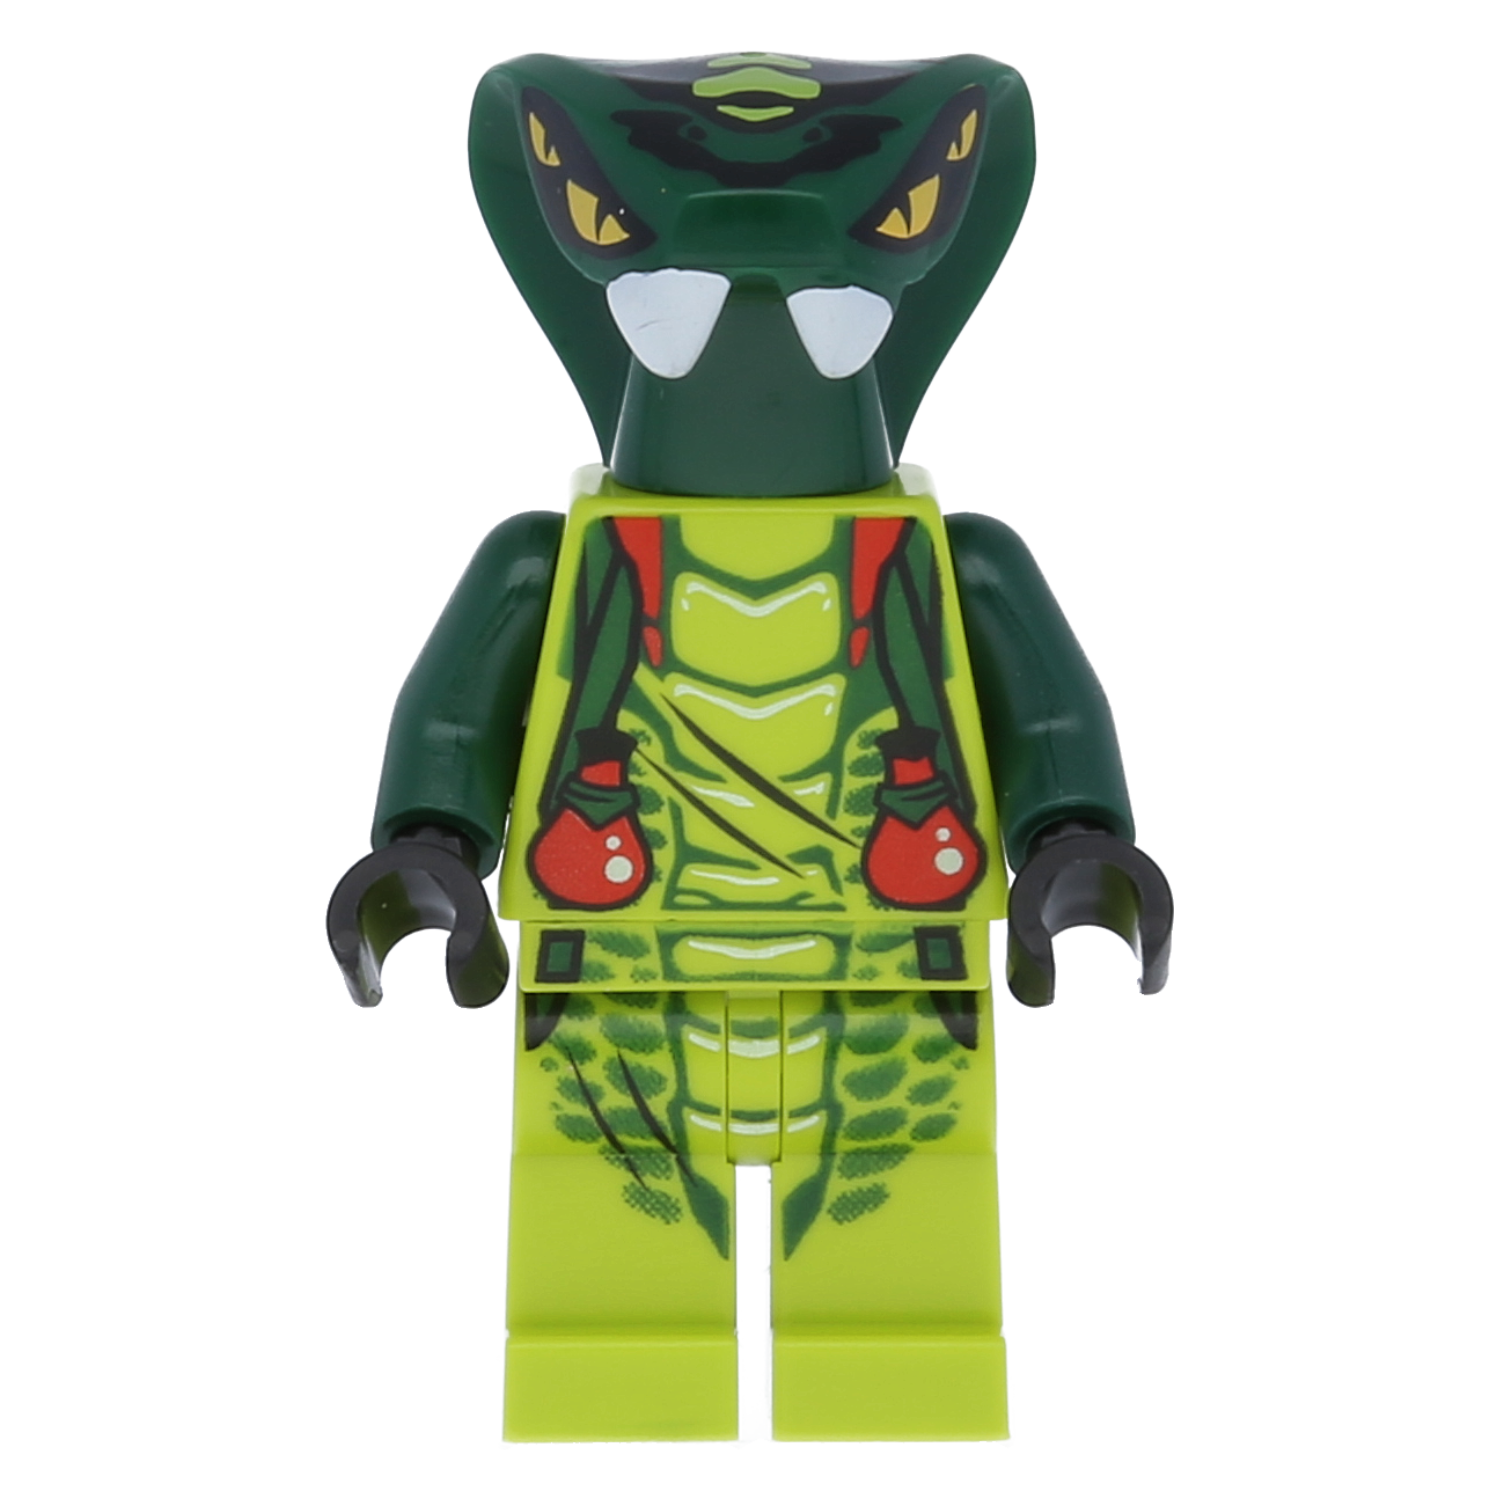 Lego Ninjago Minifigure - Spitta (red vial)